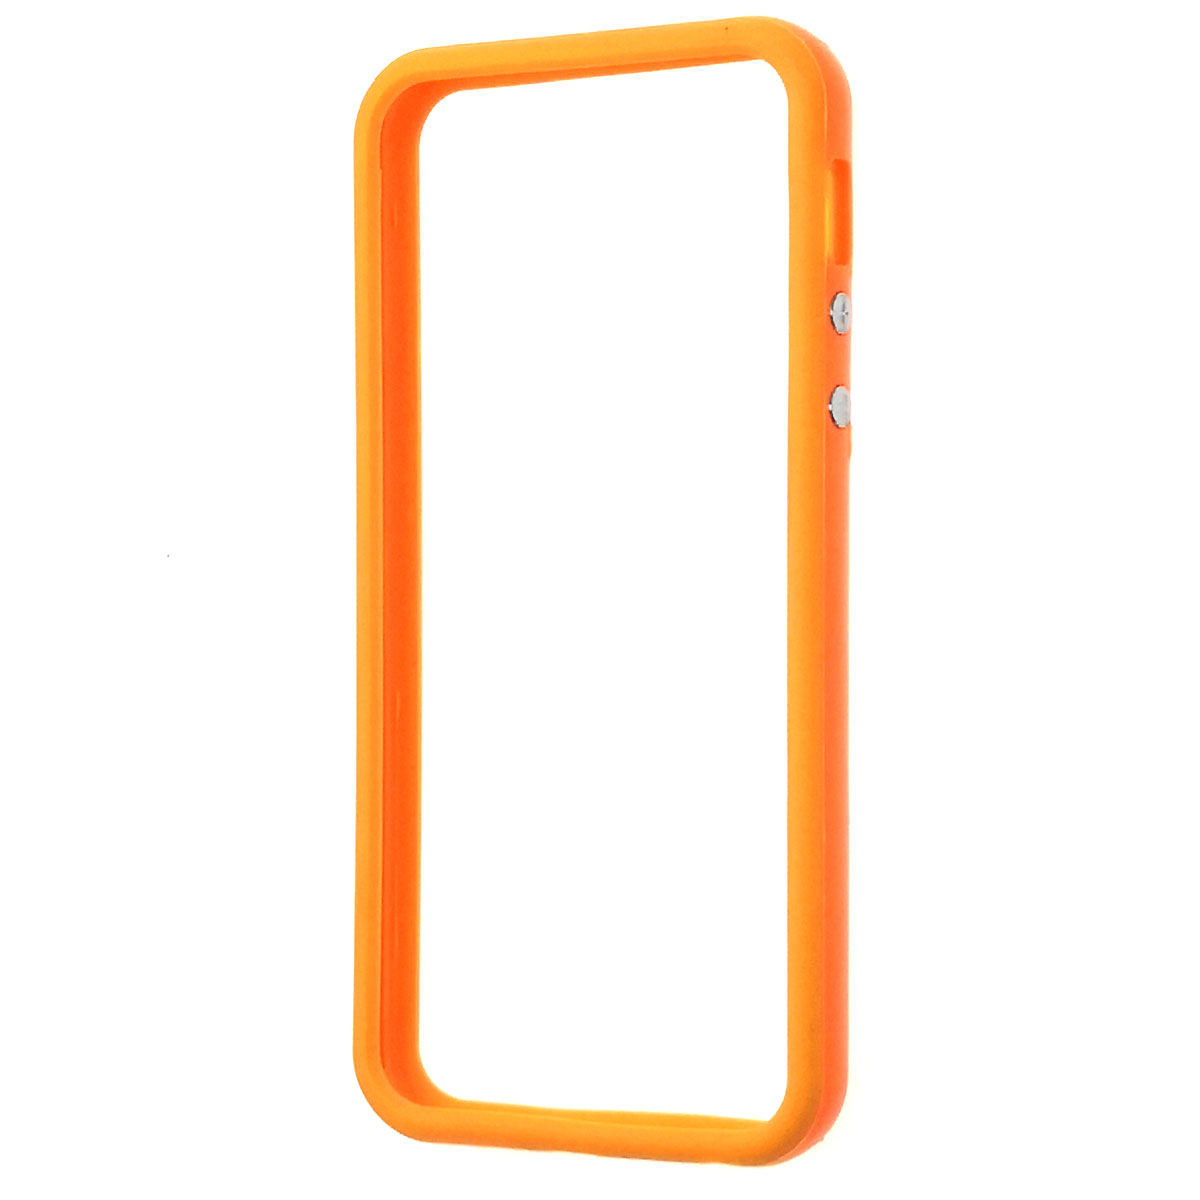 Бампер для APPLE iPhone 5, iPhone 5G, iPhone 5S, силикон, пластик, цвет оранжевый